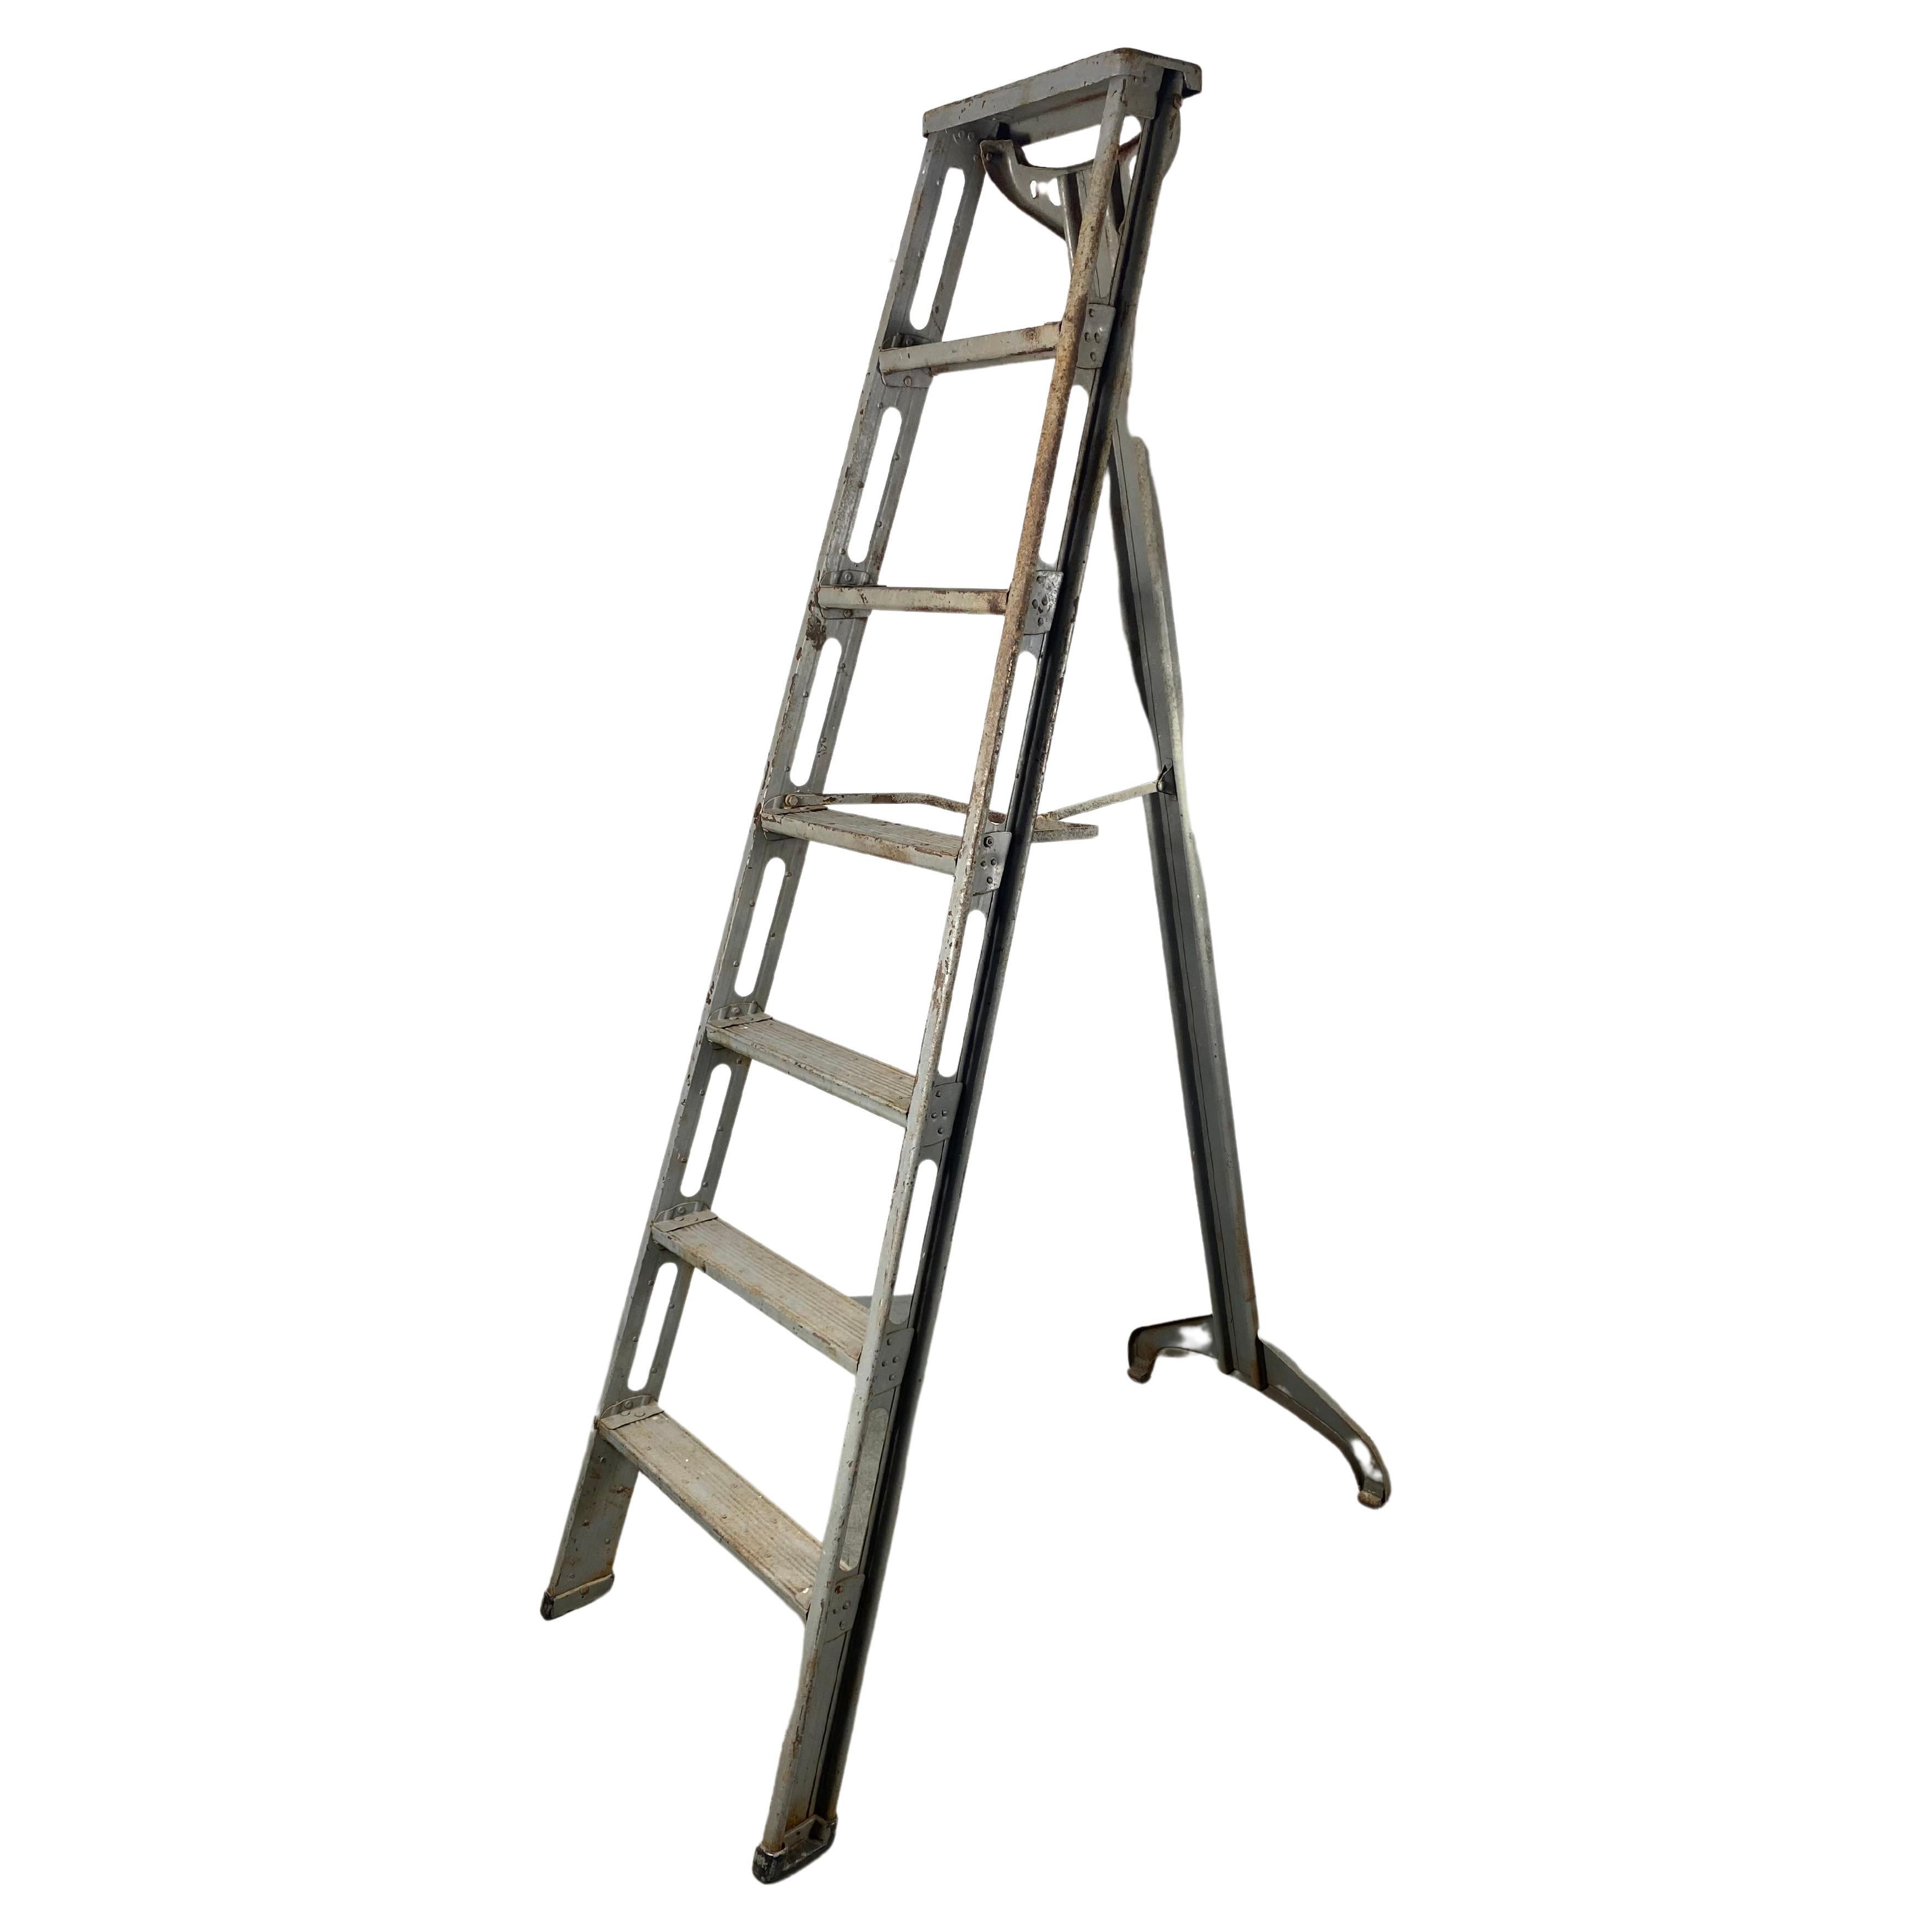 Antique Industrial Professional Painters Ladder, Modernist Design